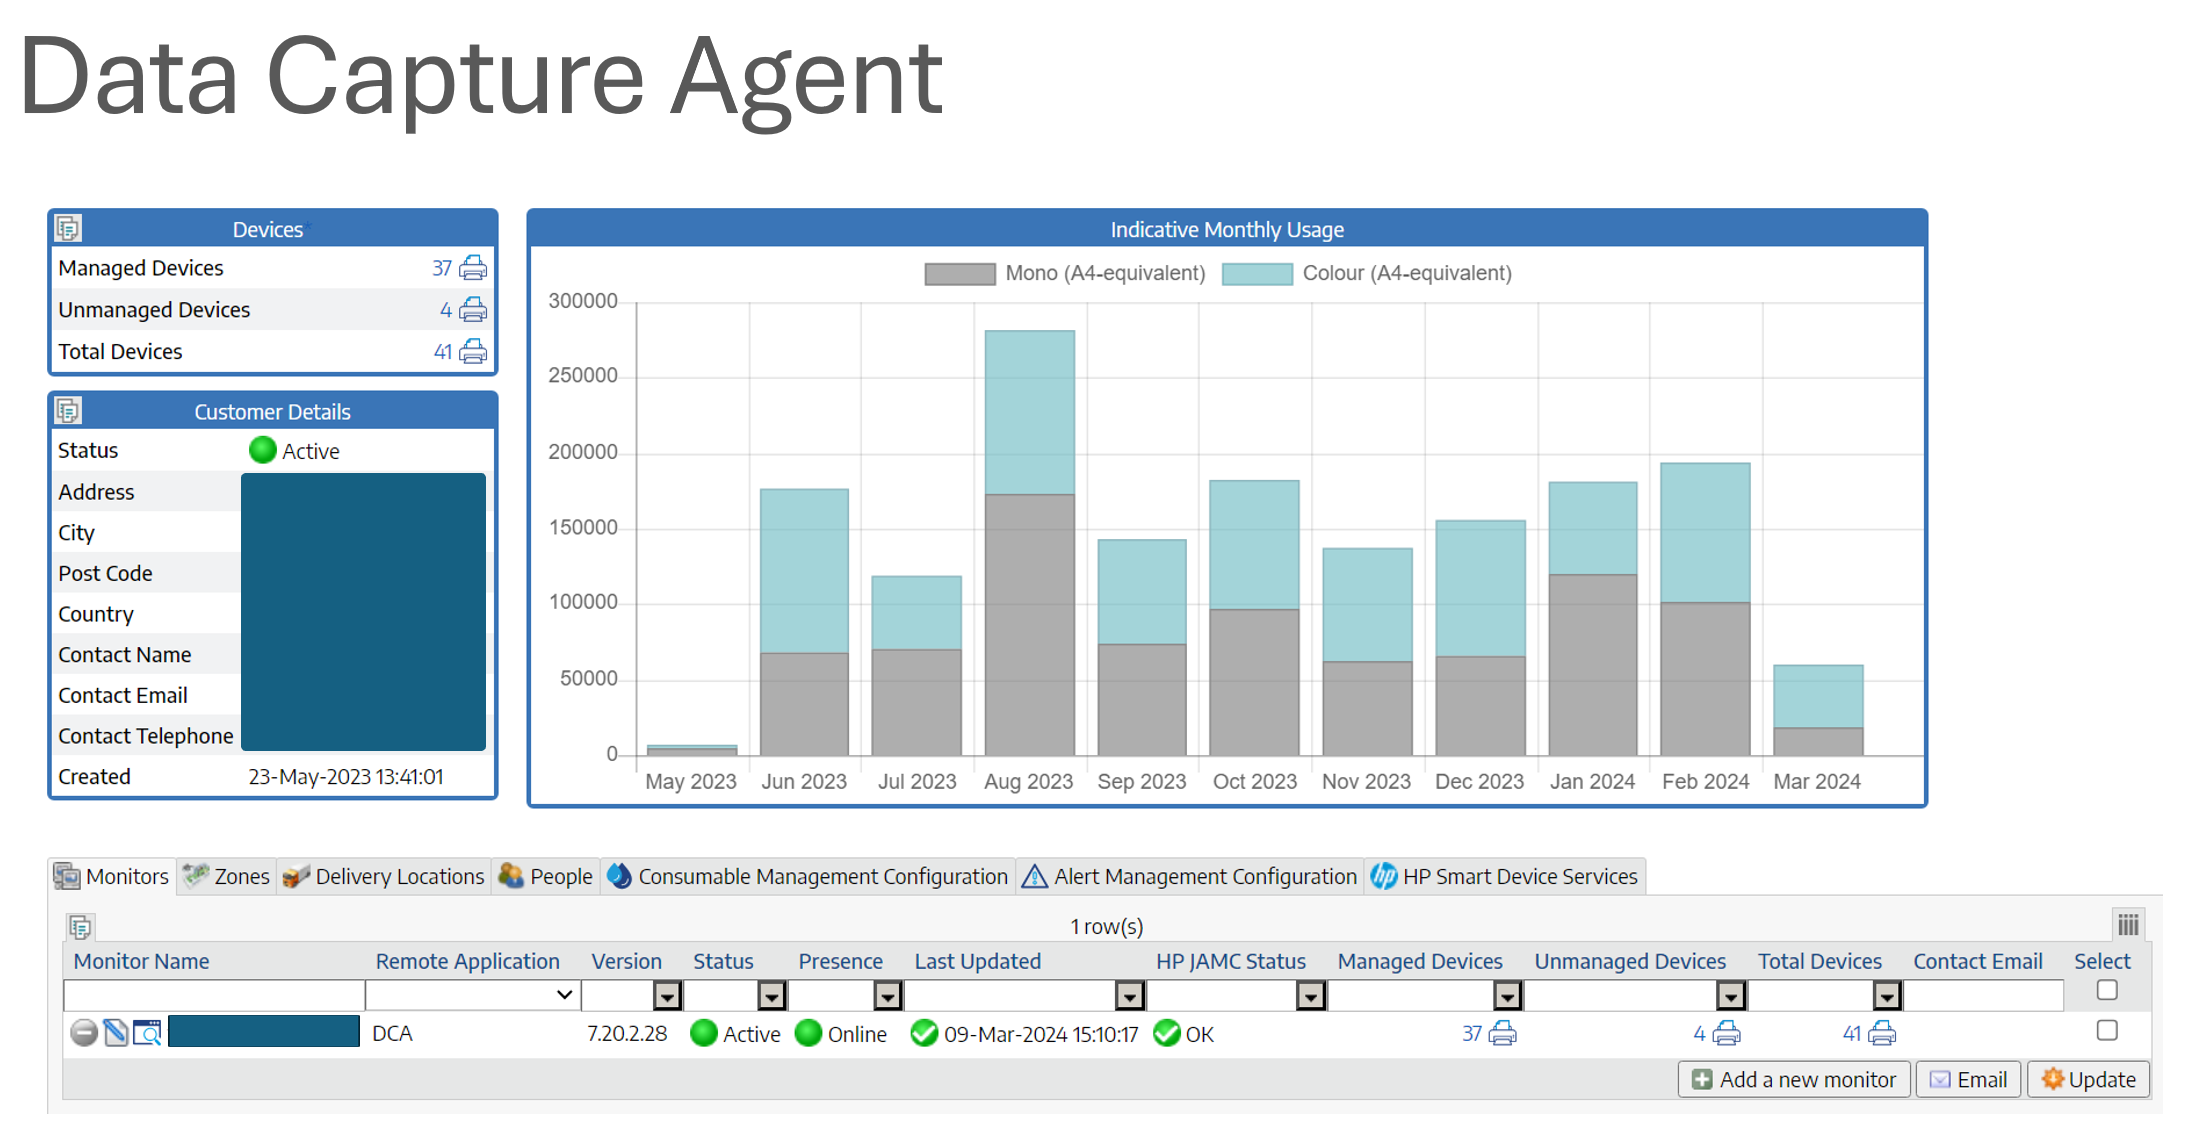 Data Capture Agent Activity Dashboard